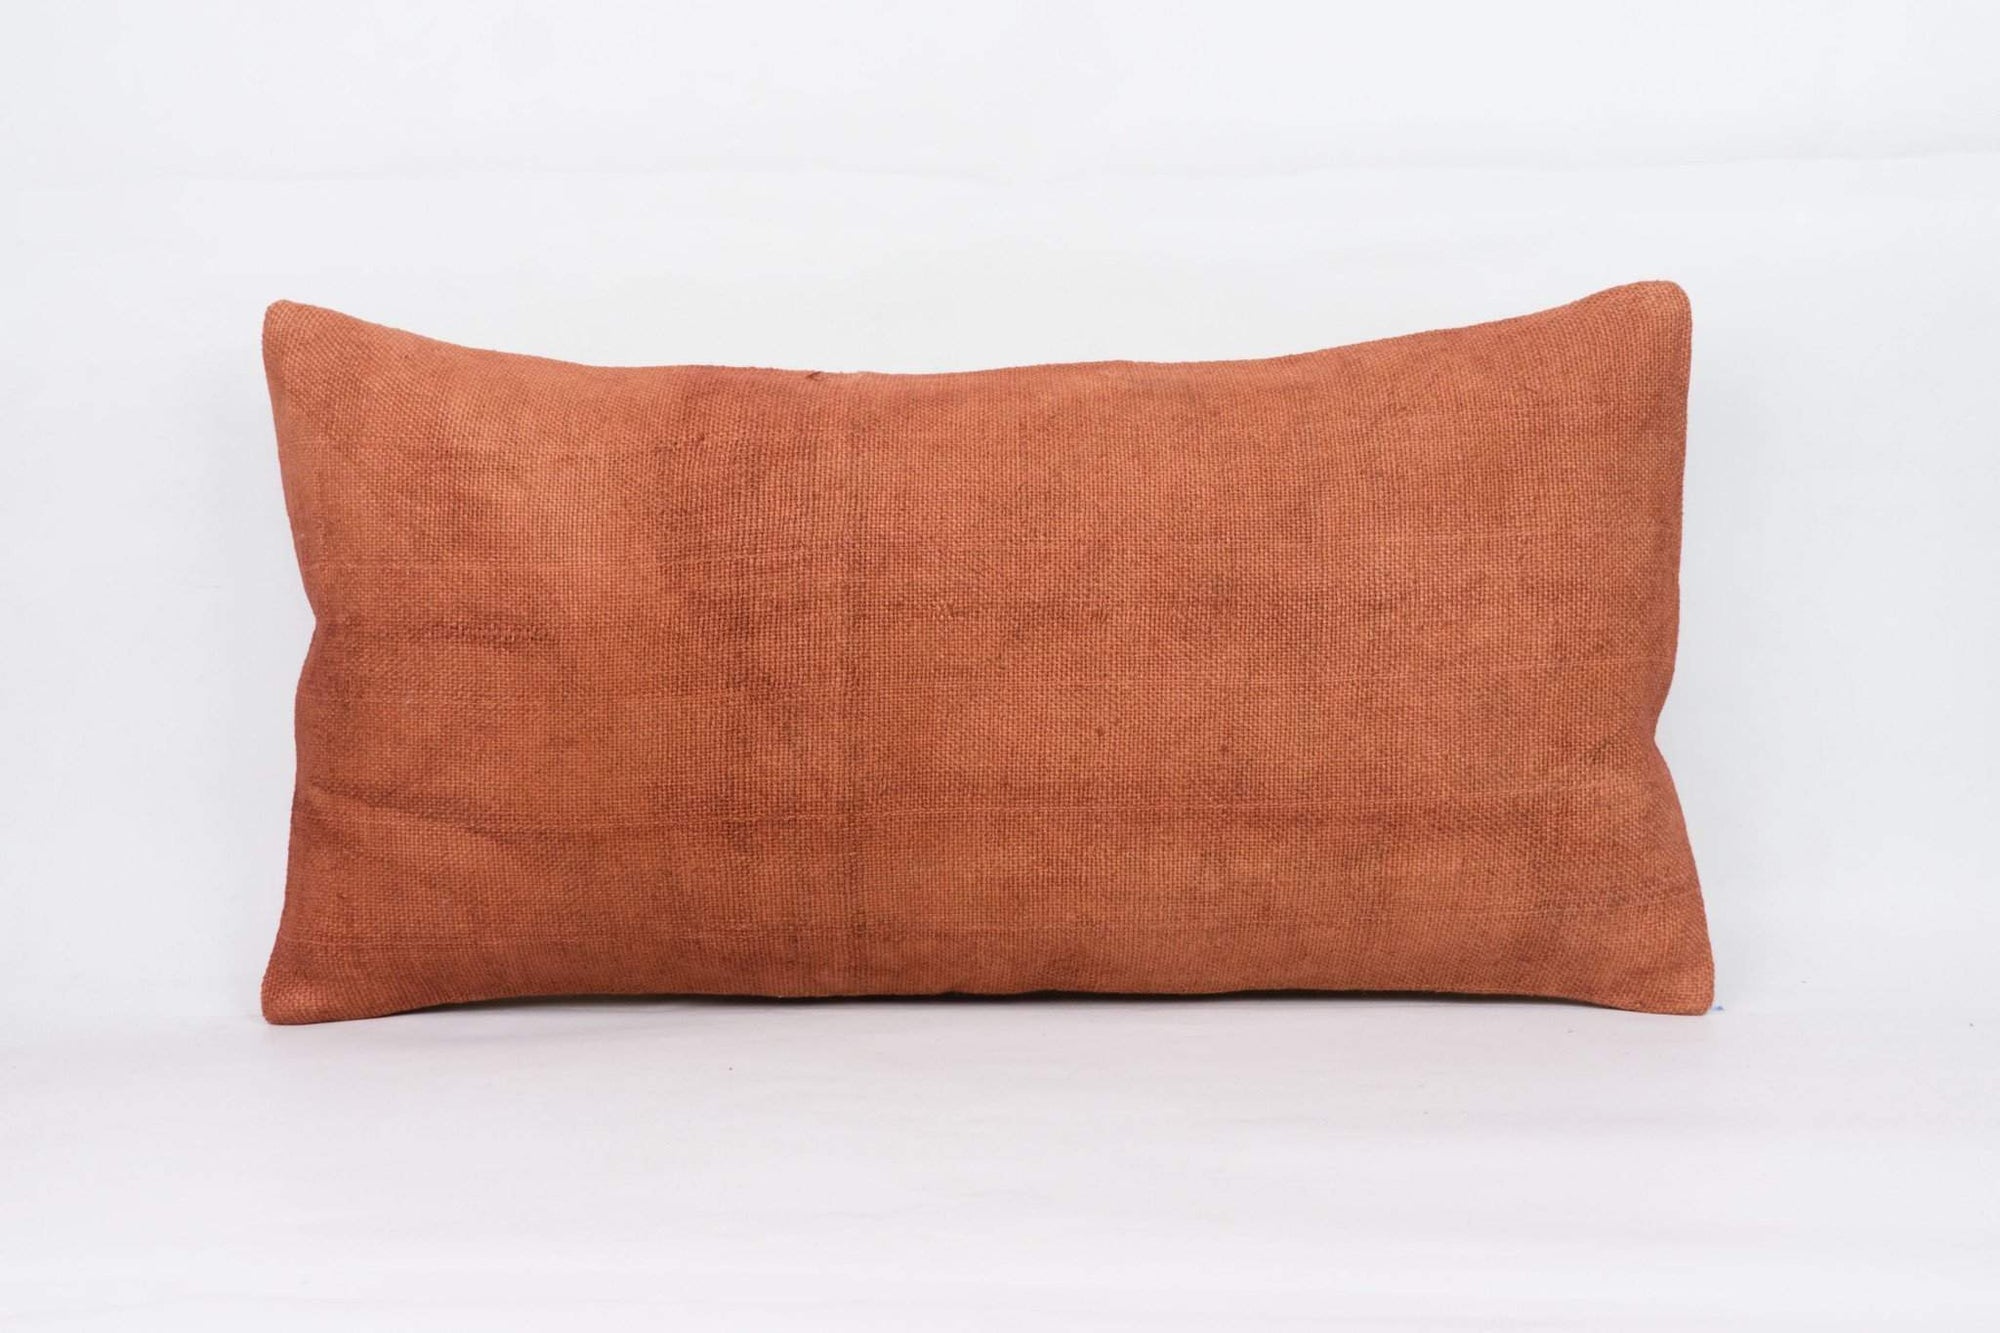 Plain Brown Kilim Pillow Cover 12x24 4208 - kilimpillowstore
 - 1